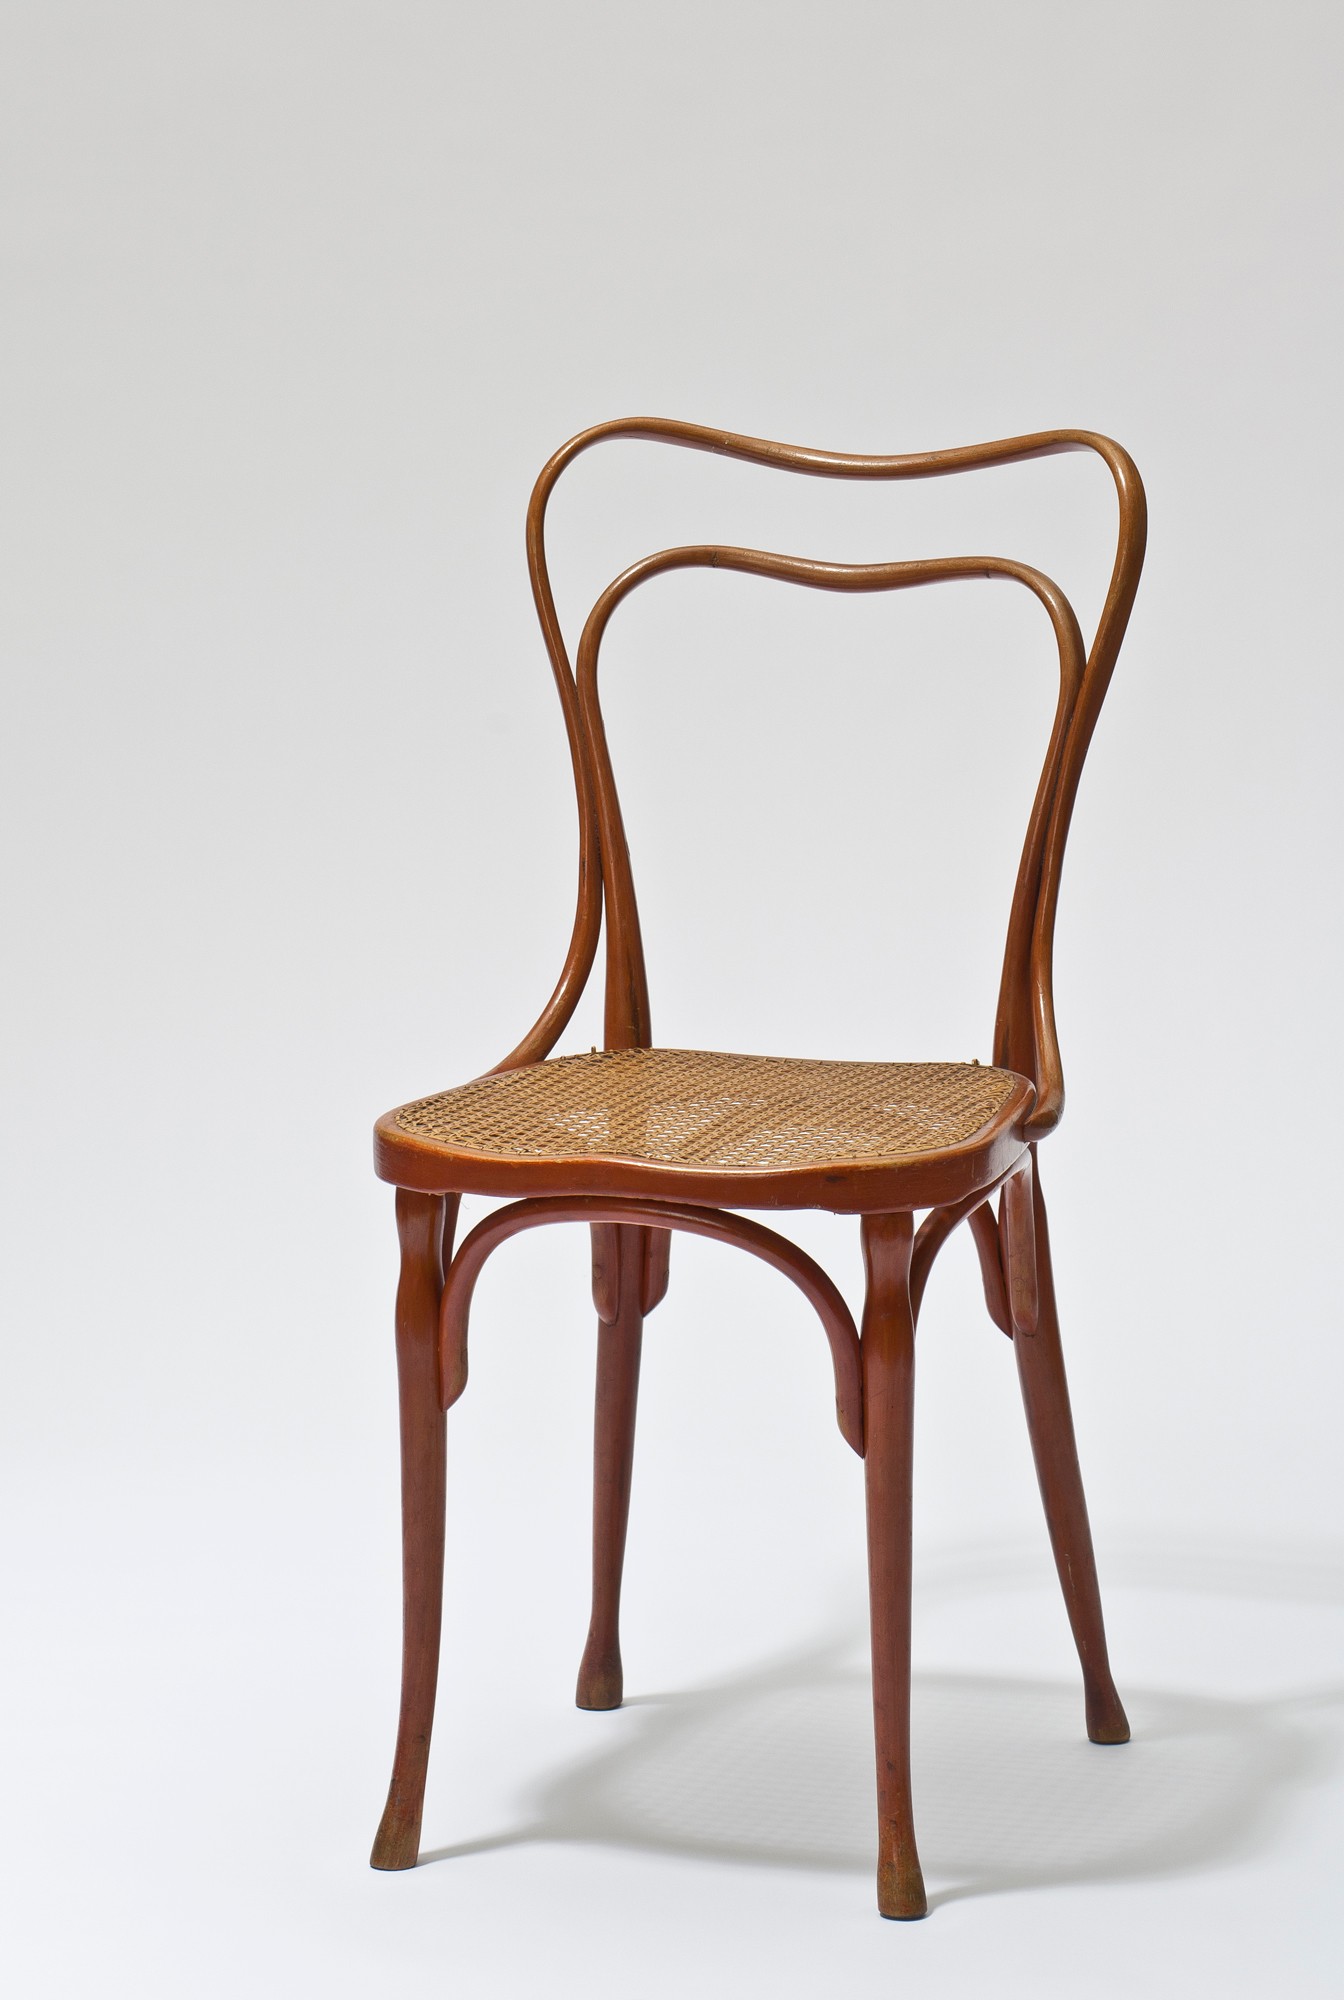 <BODY>Adolf Loos, Chair for the Café "Museum", Vienna, 1898, H 2805 / 1985 © MAK </BODY>